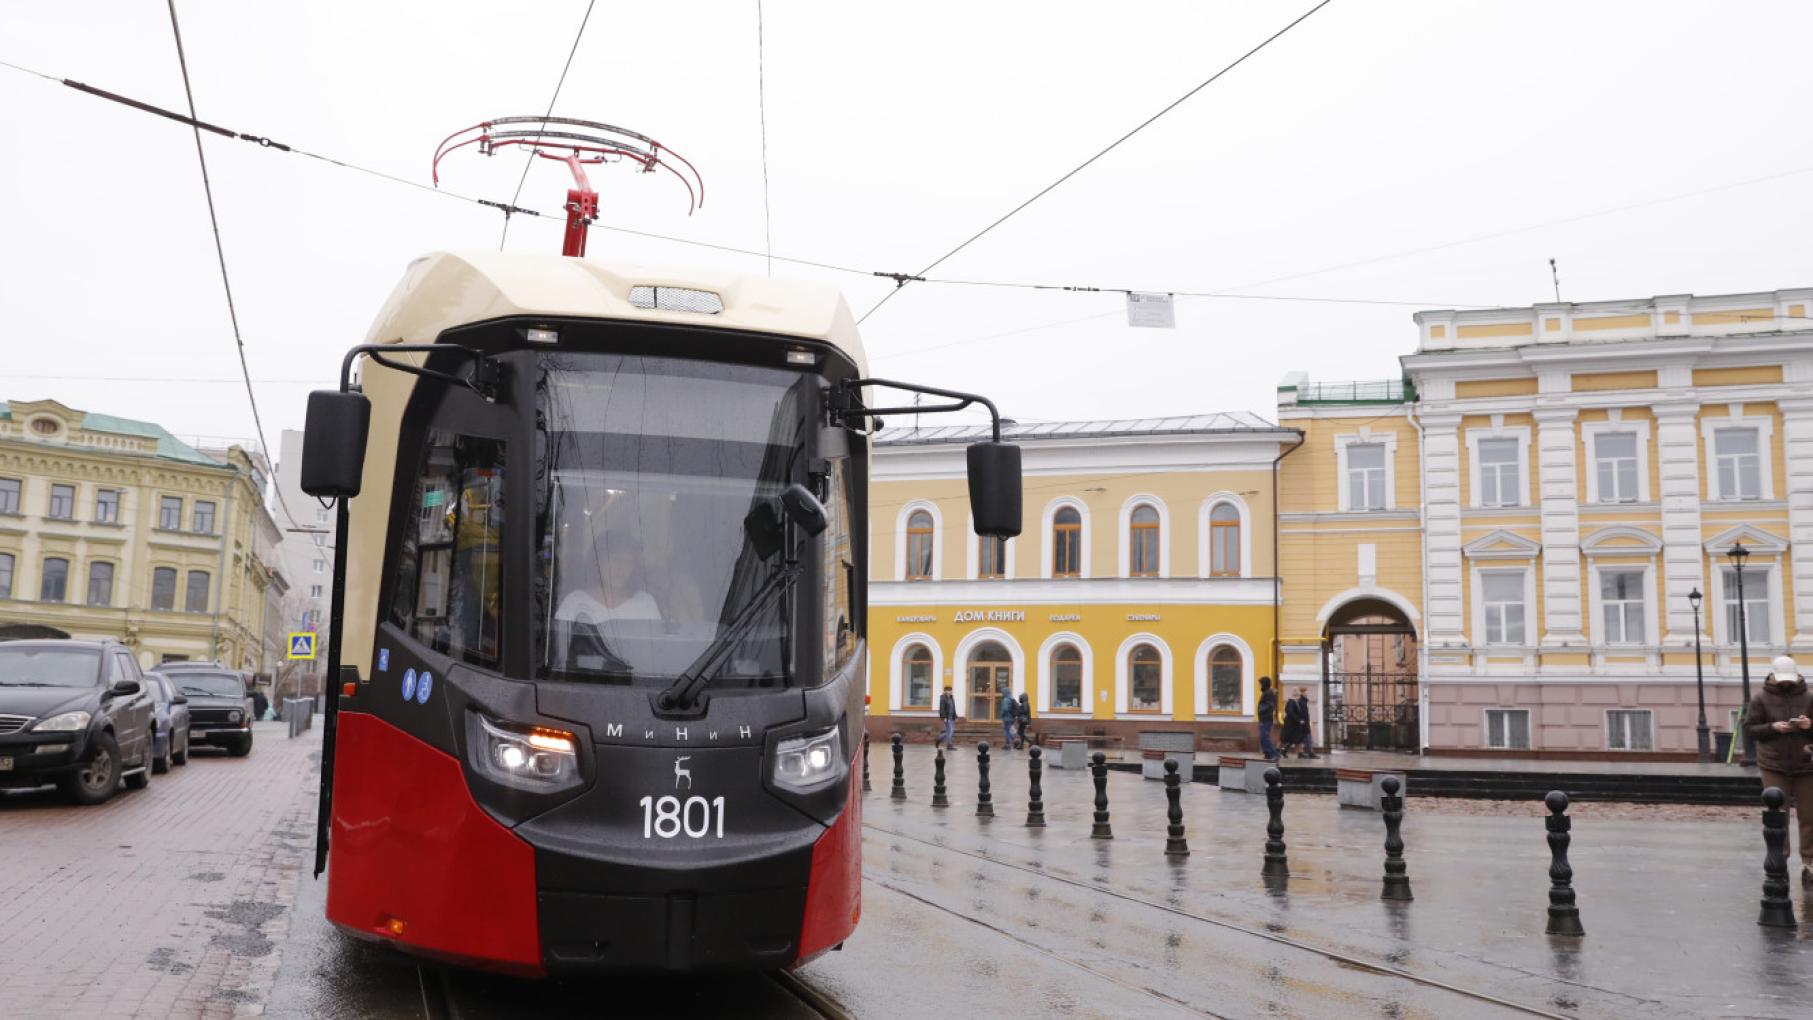 Трамваи «МиНиН» курсируют на городском трамвайном кольце